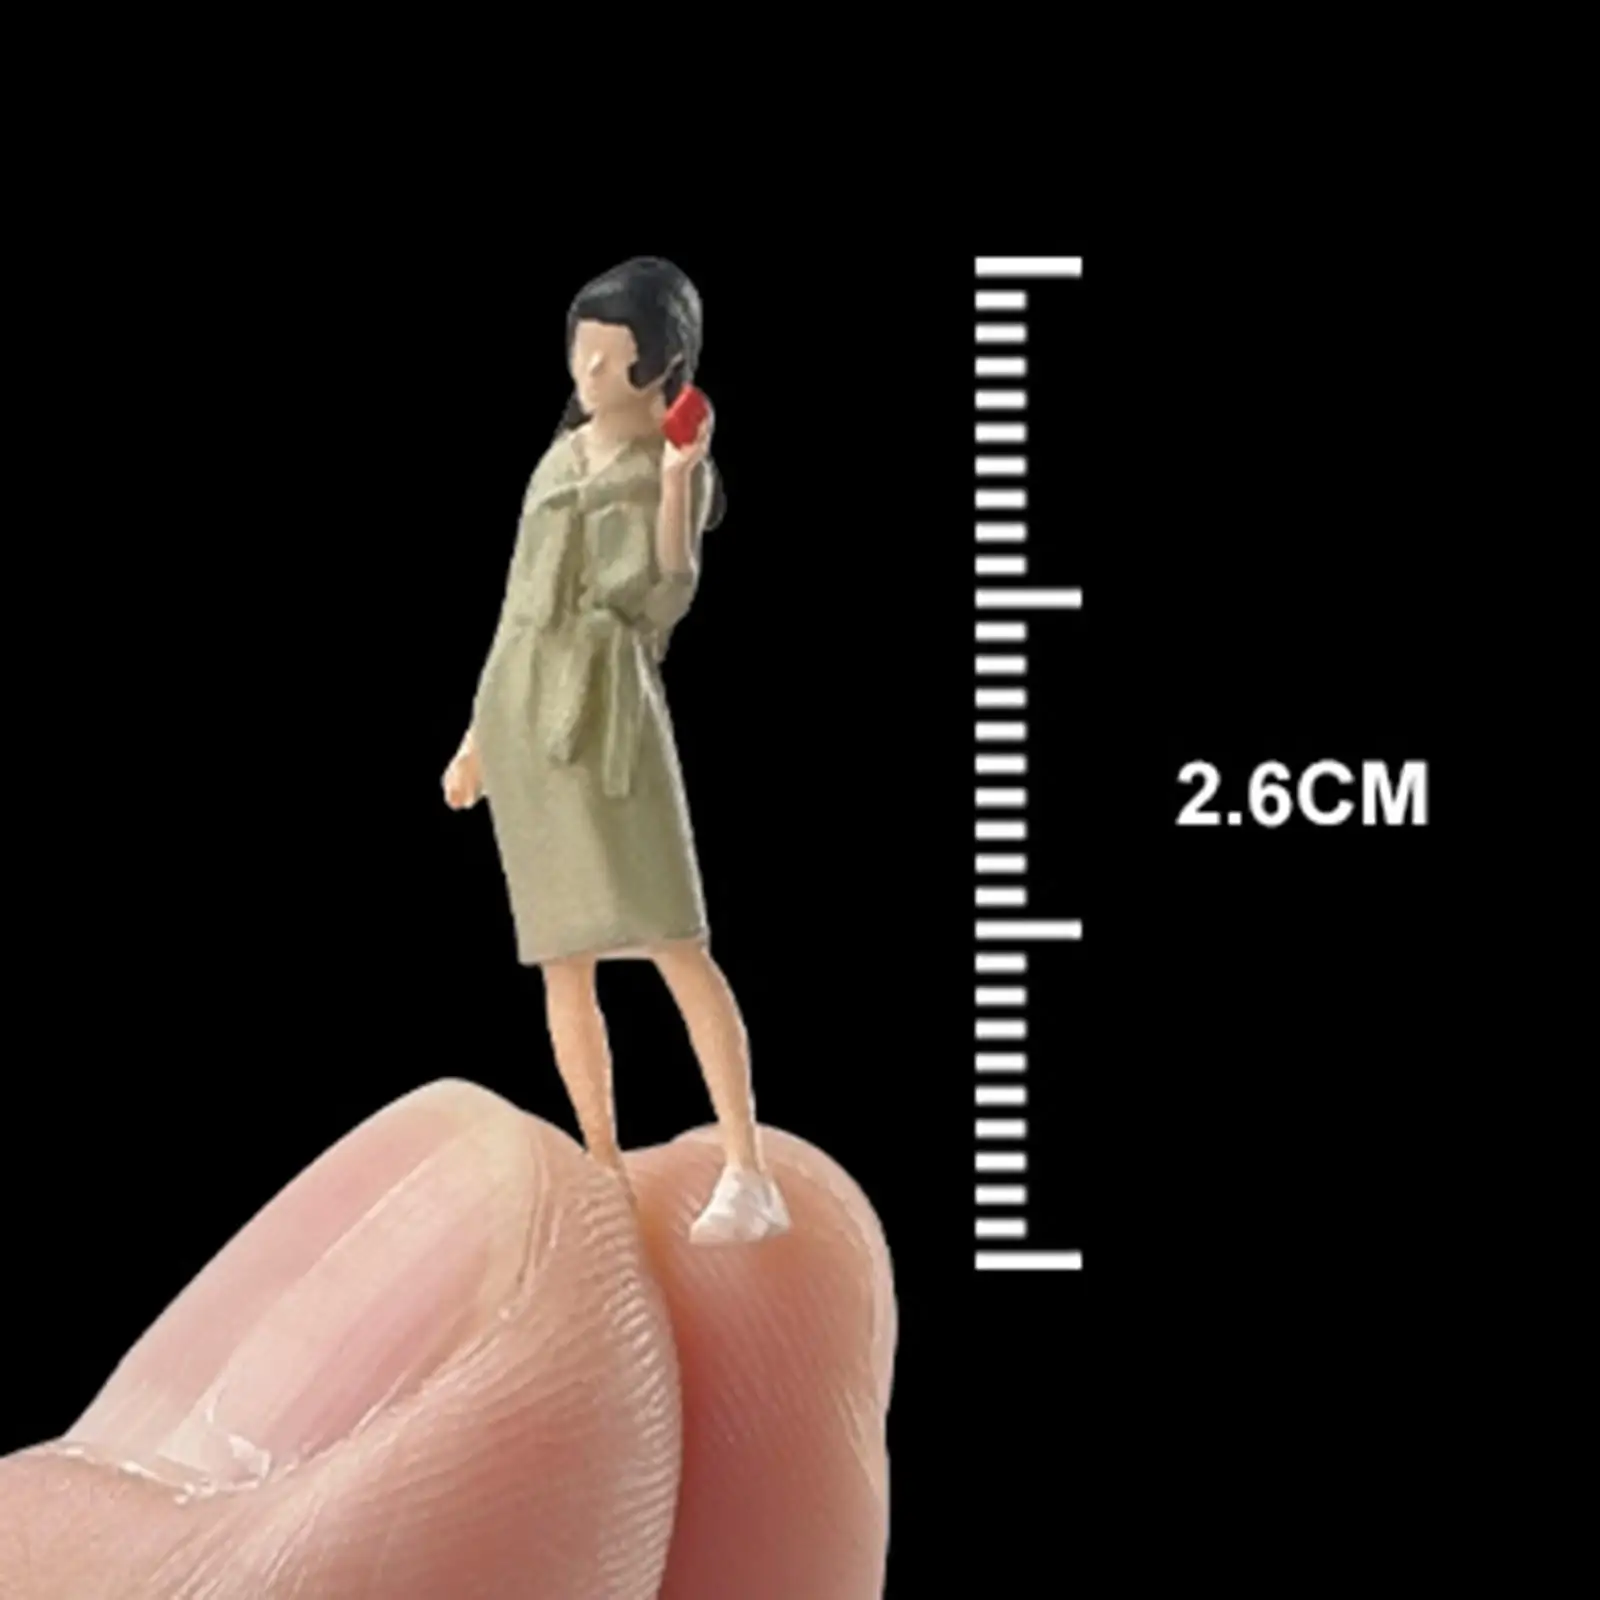 Girl People Figurine Diorama Scenery Architectural Character Model for Fairy Garden Miniature Scene Train Layout Micro Landscape